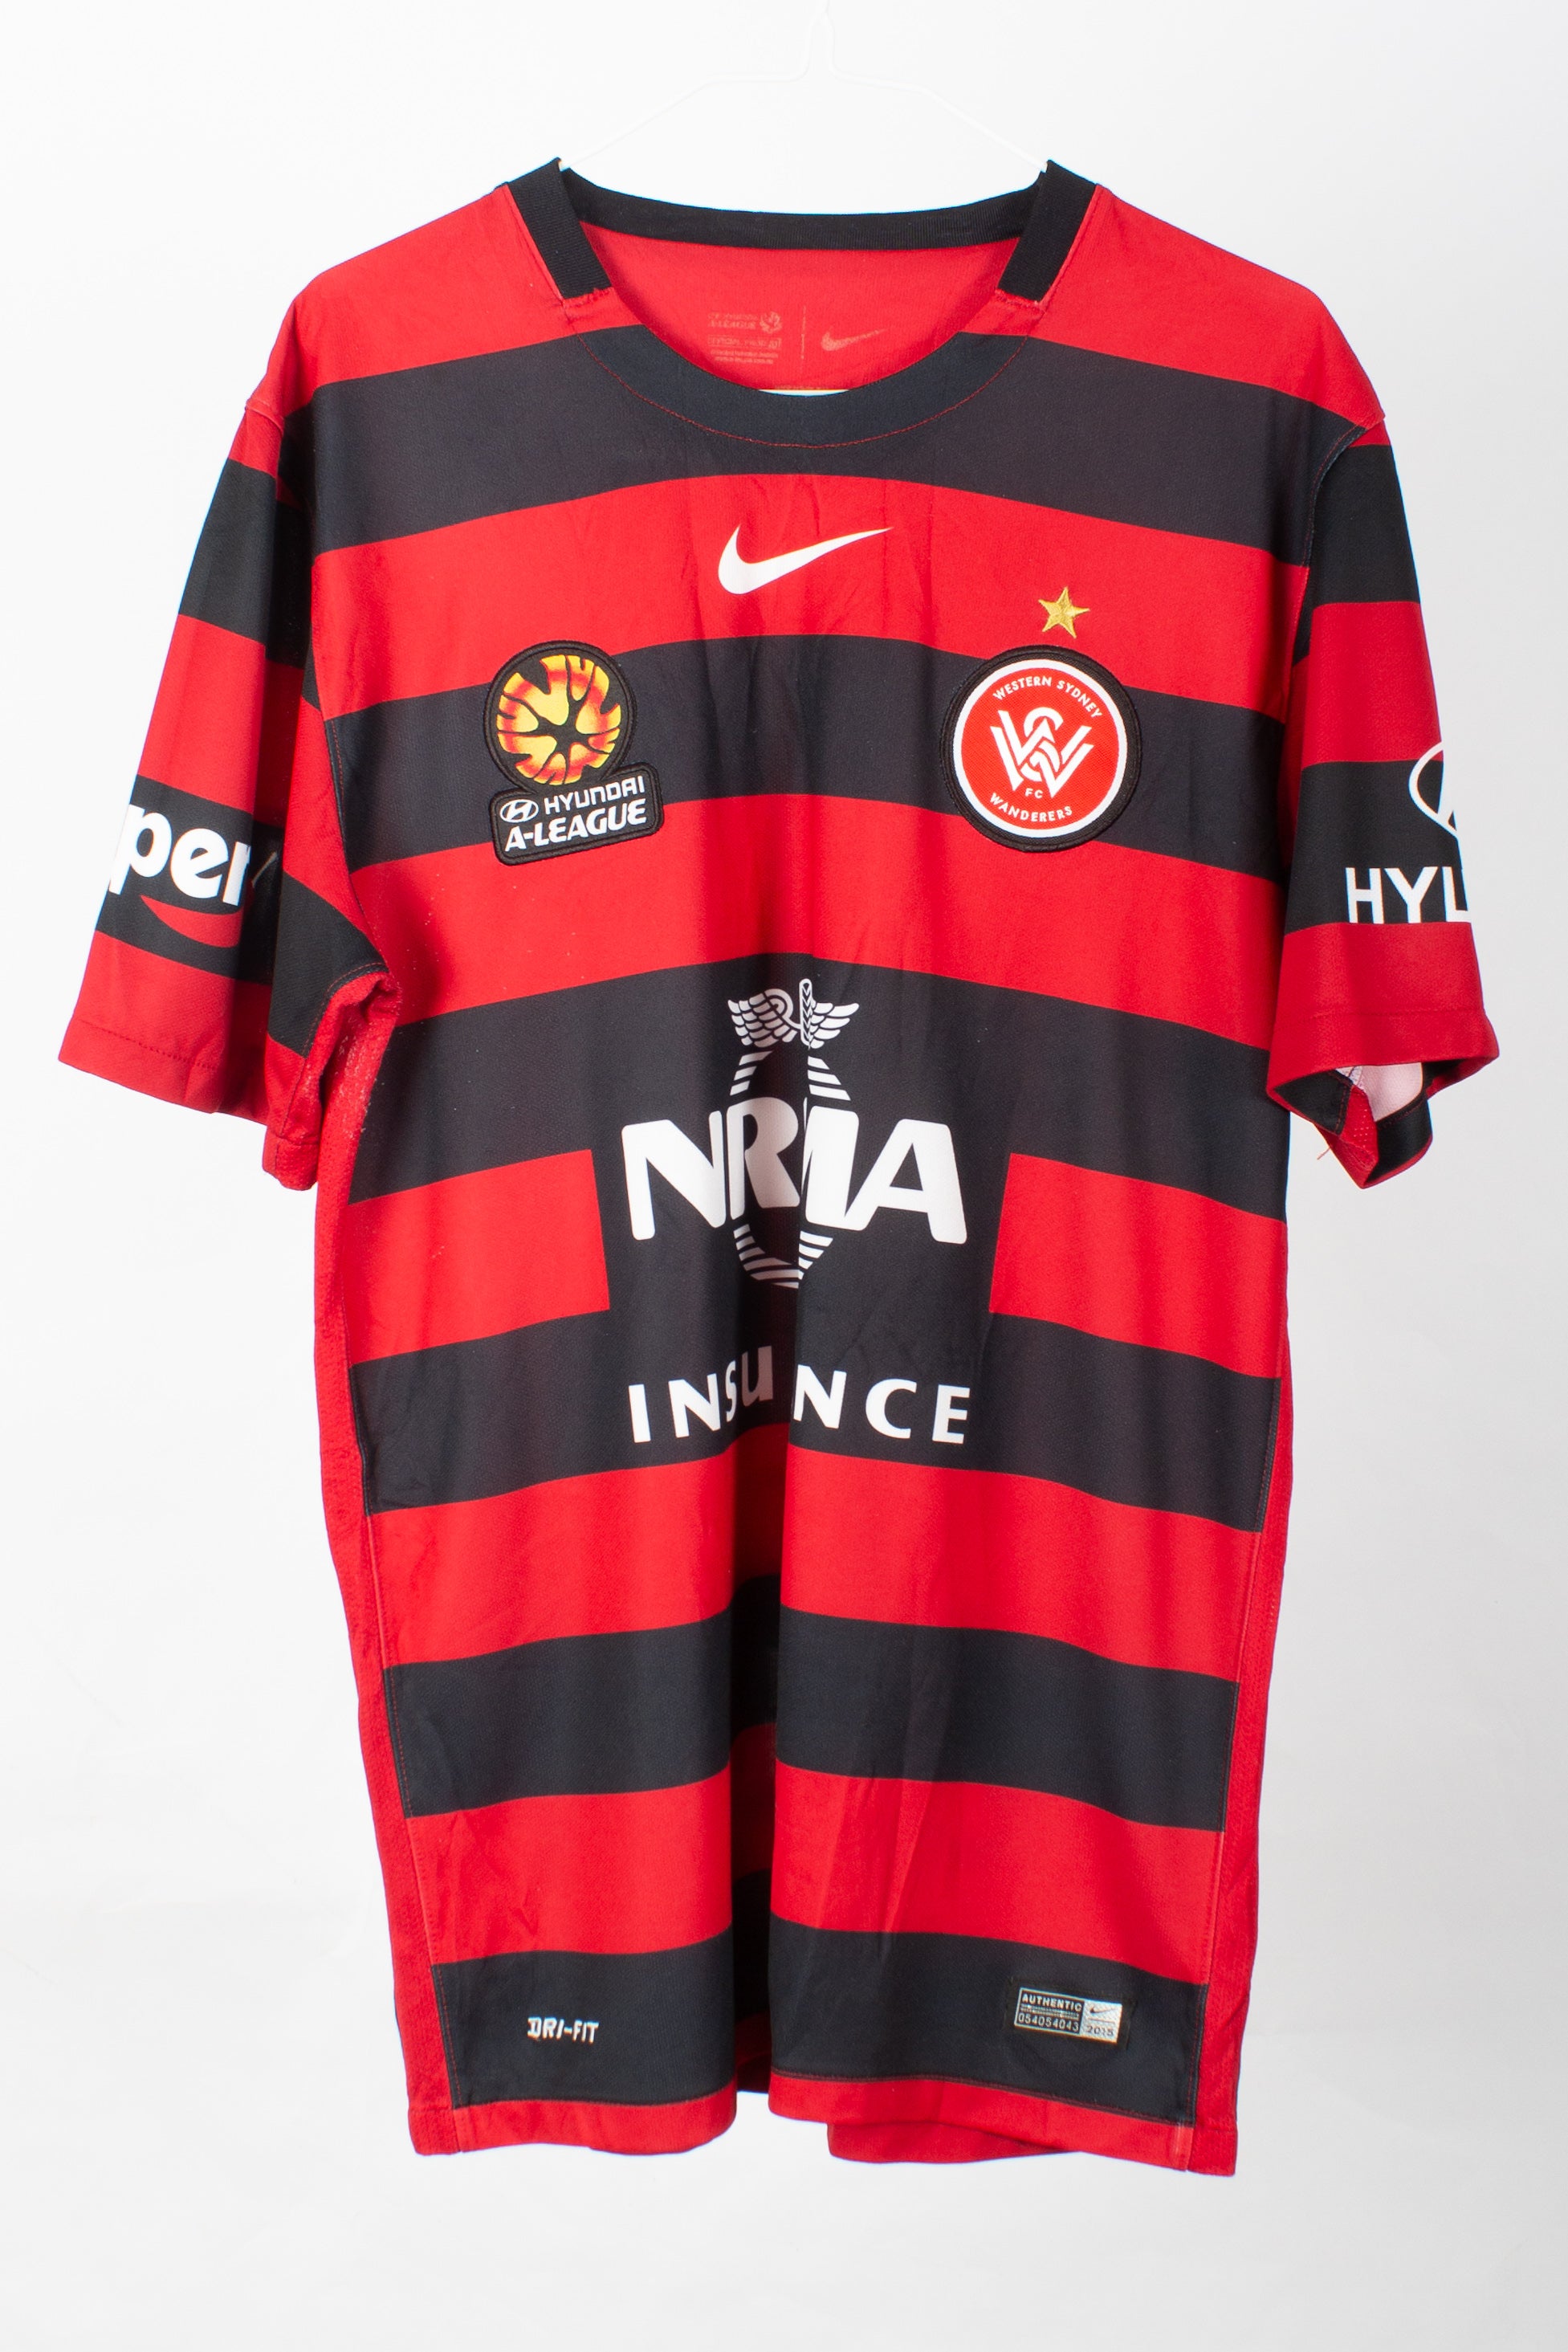 Western Sydney Wanderers 2015/16 Home Shirt (M)